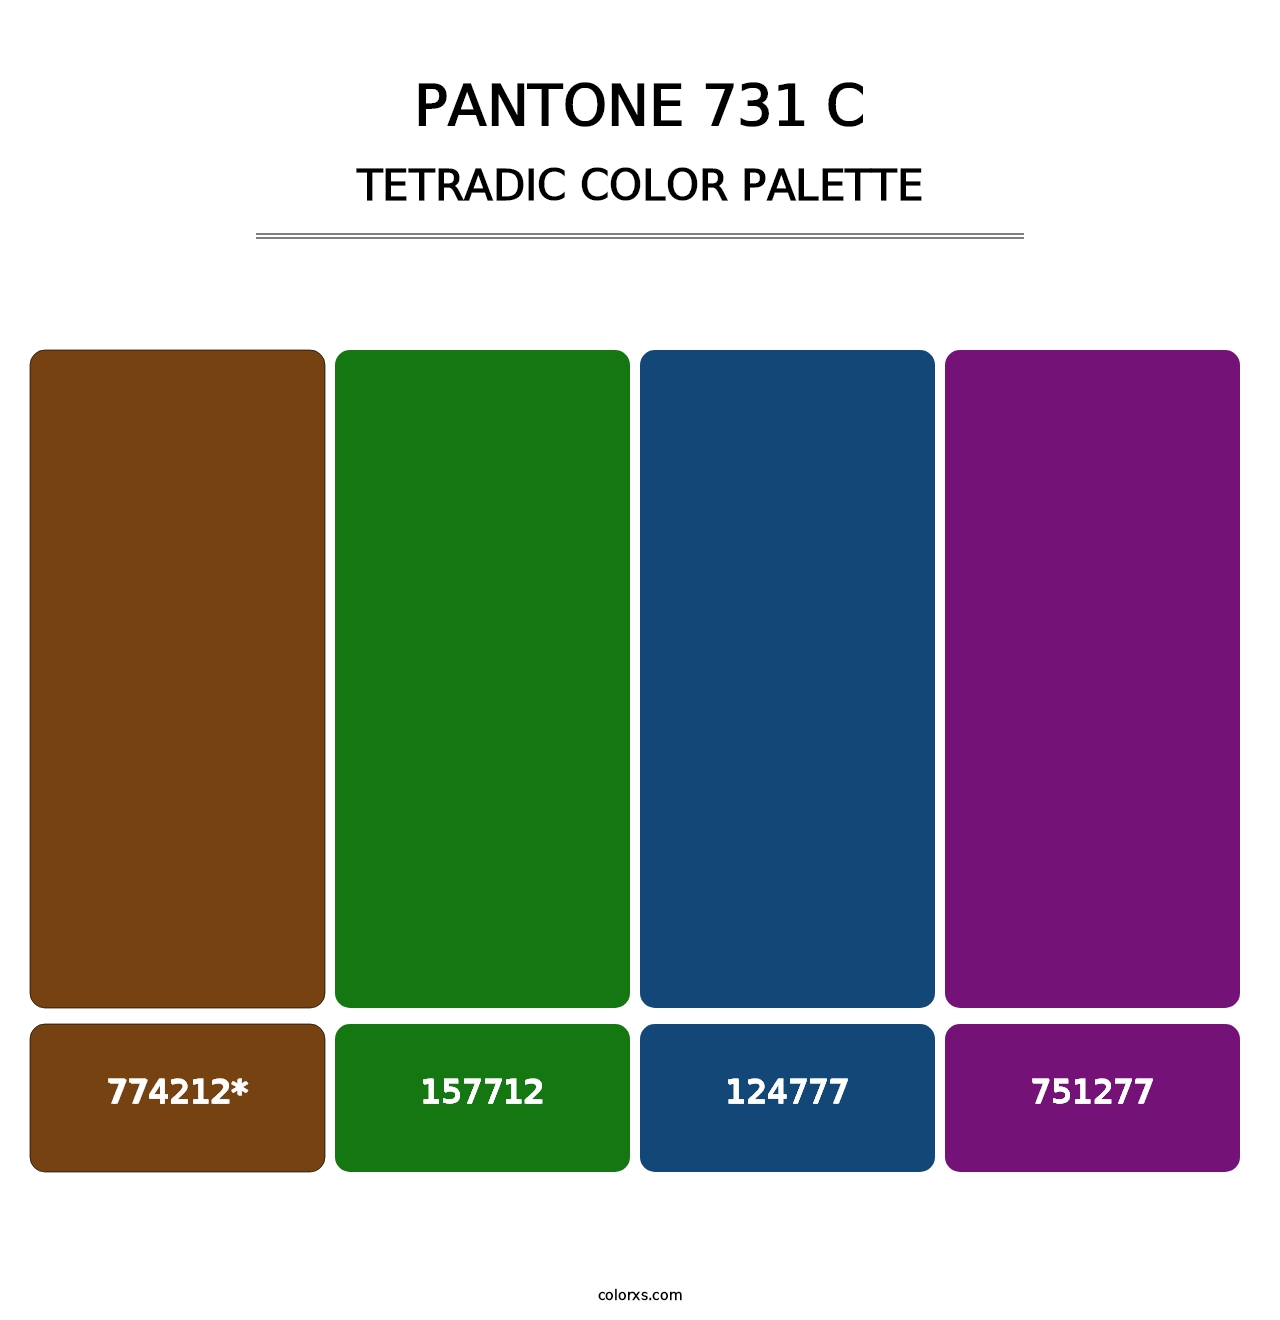 PANTONE 731 C - Tetradic Color Palette